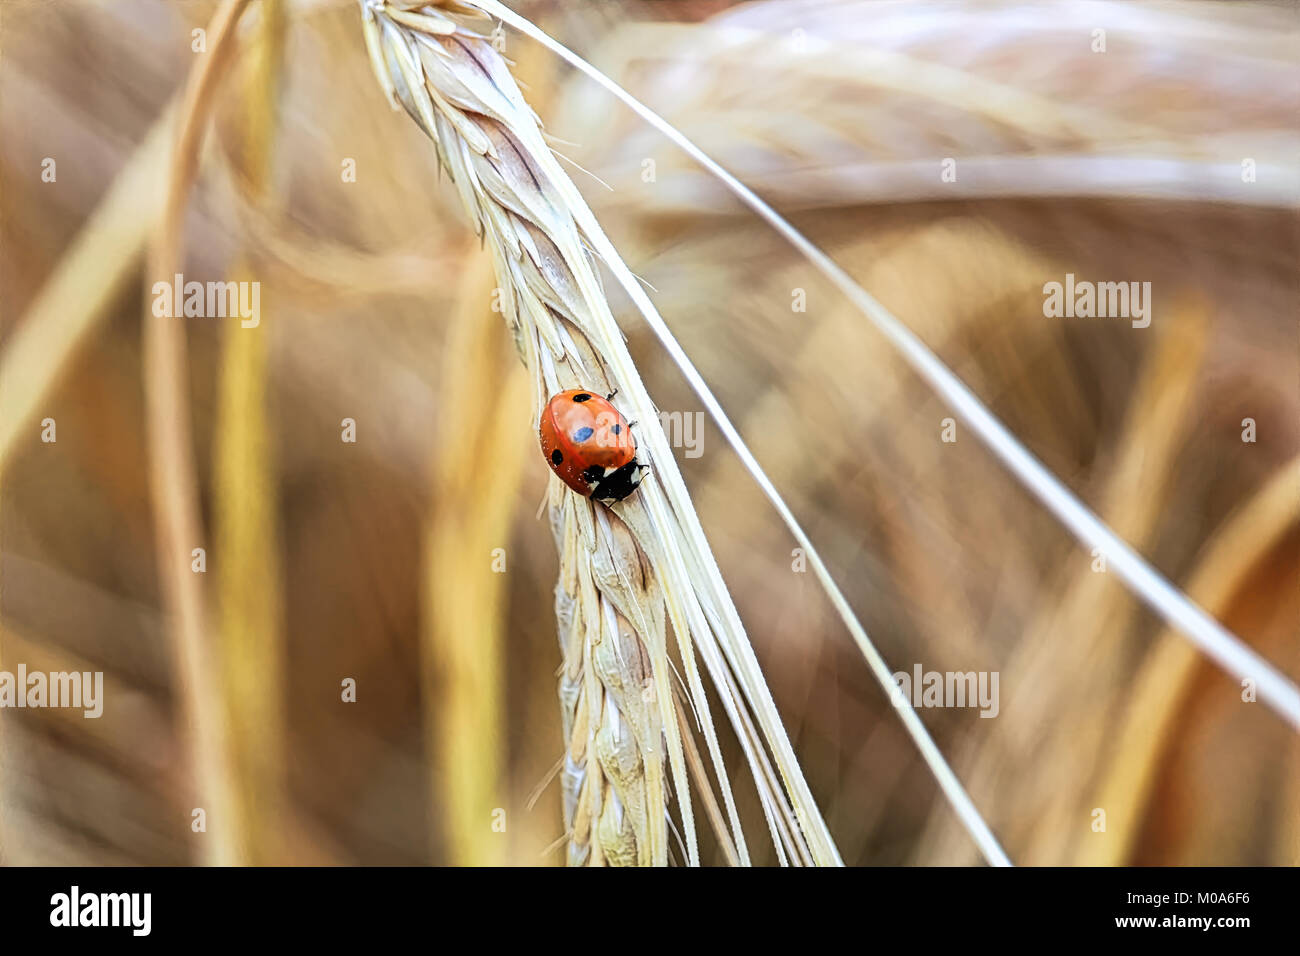 Closeup of a ladybug on a golden barley head Stock Photo